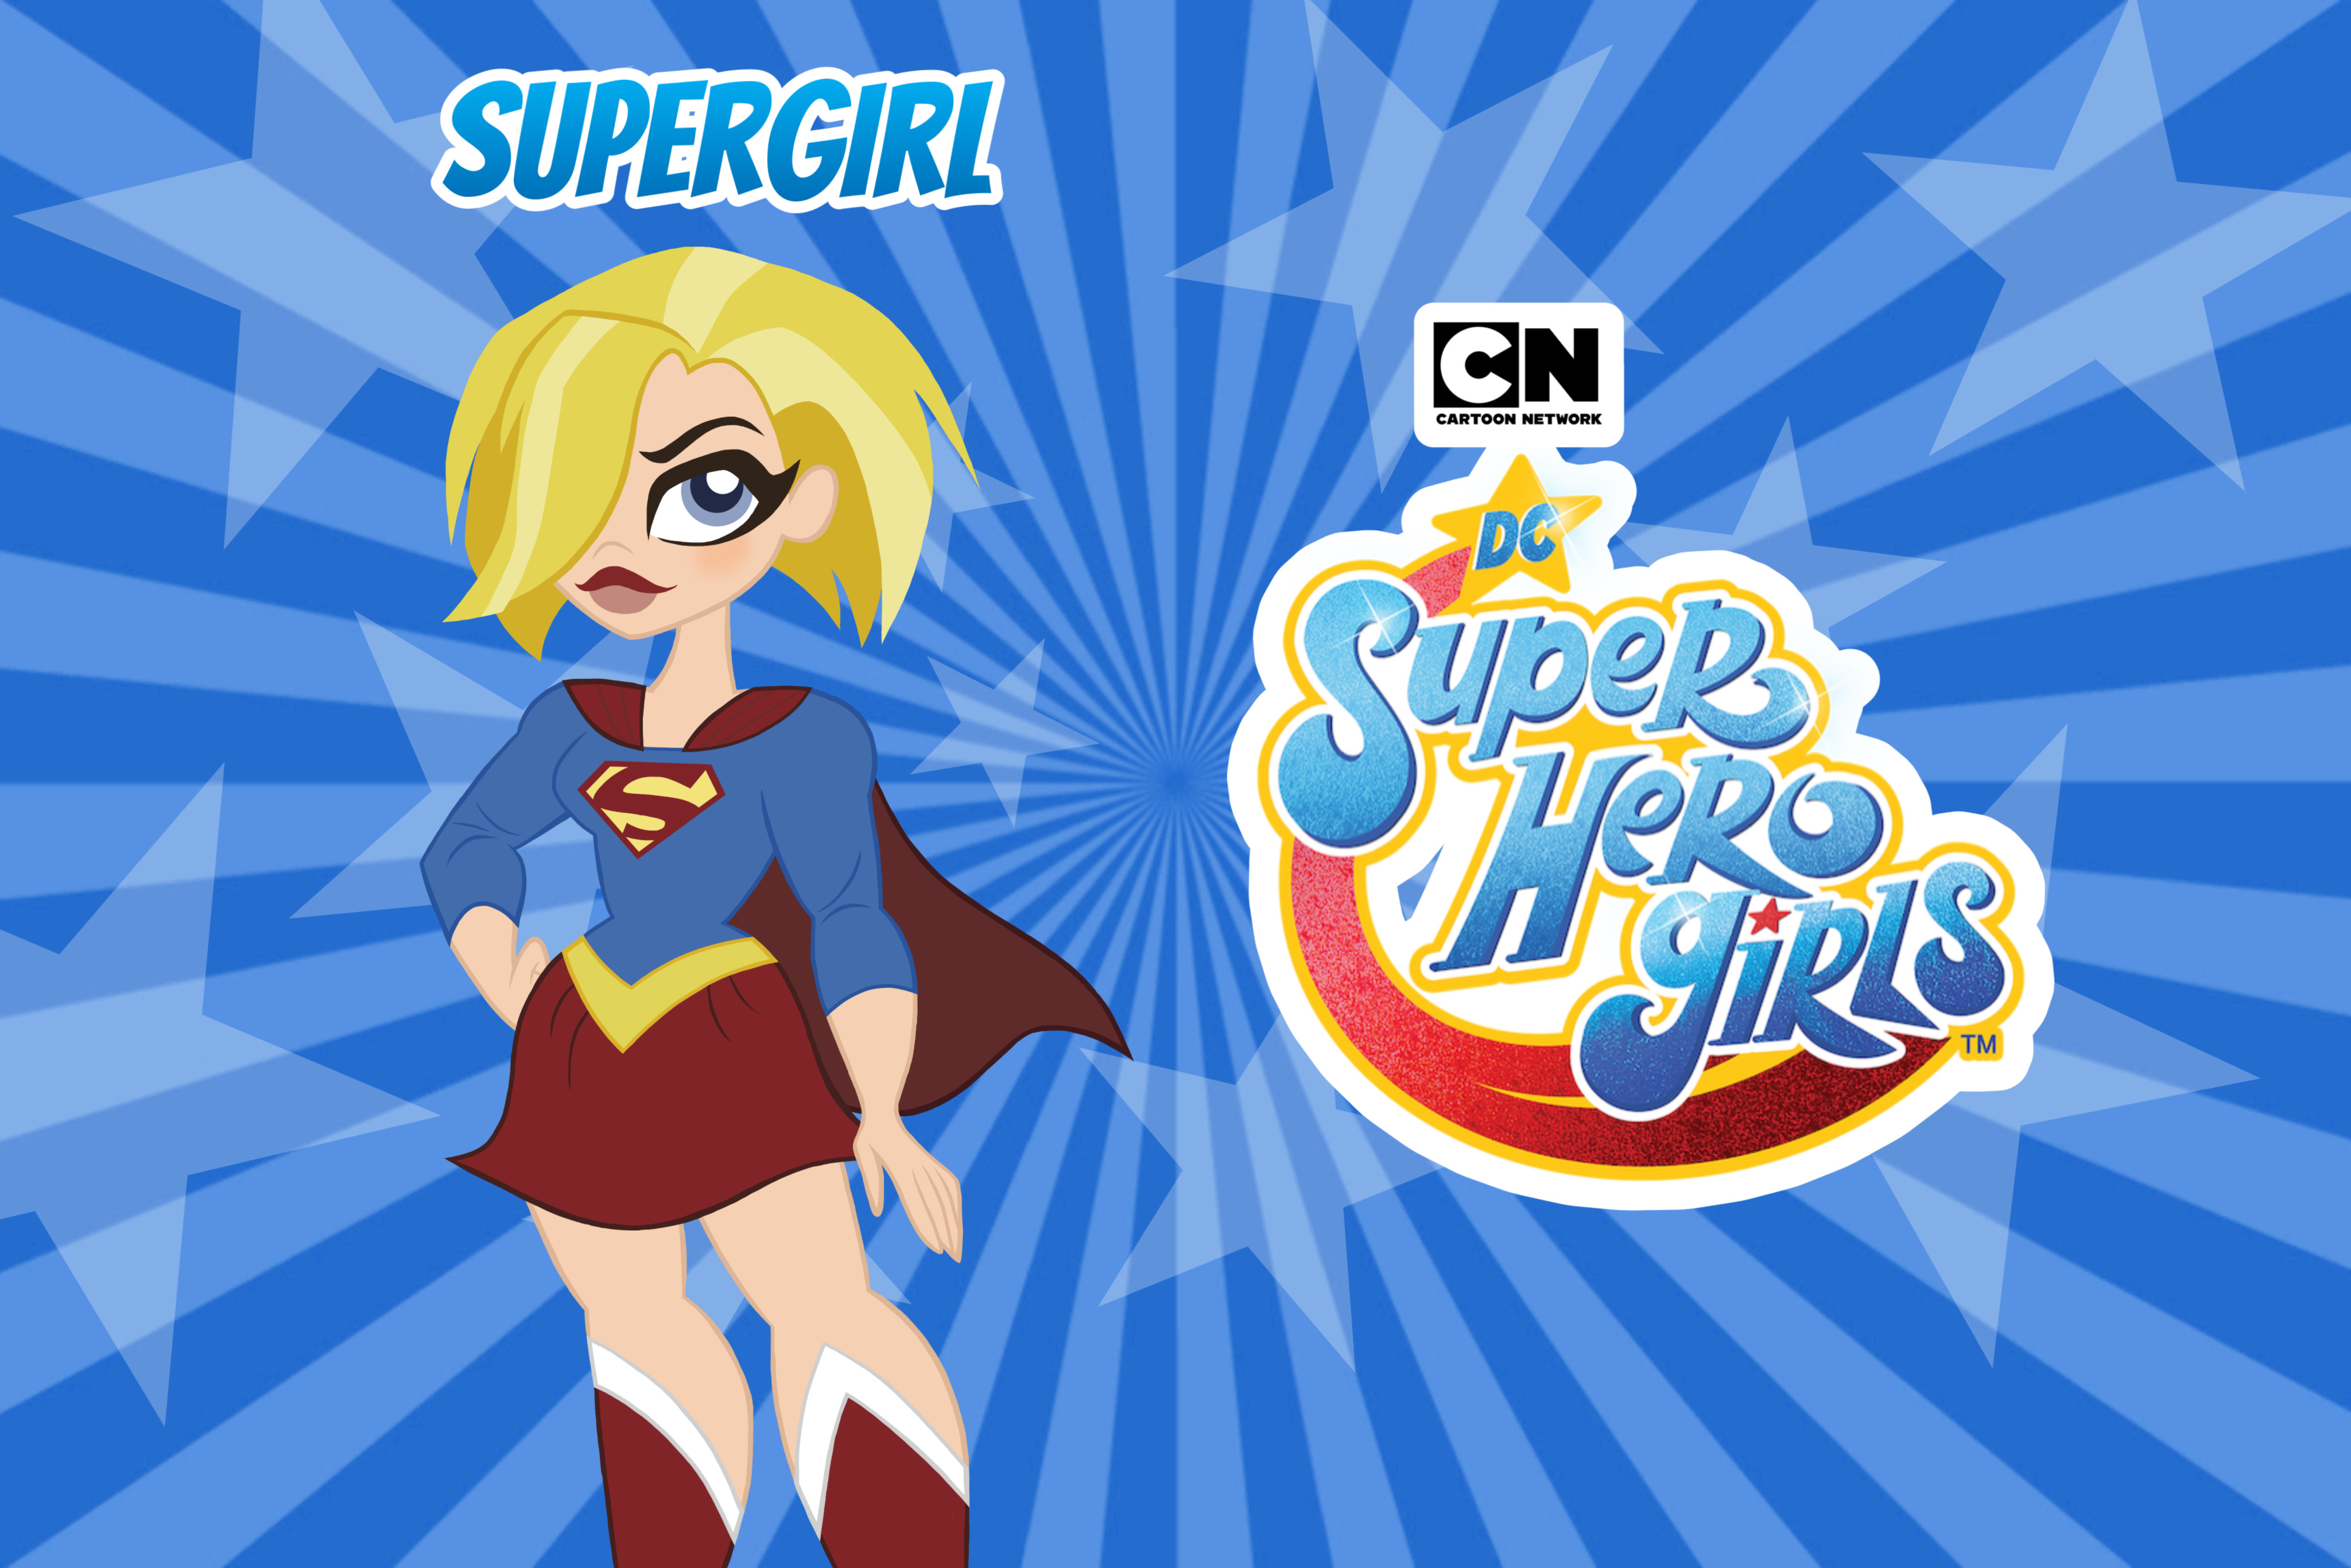 Supergirl (DC SuperHero Girls) by seanscreations1 on DeviantArt